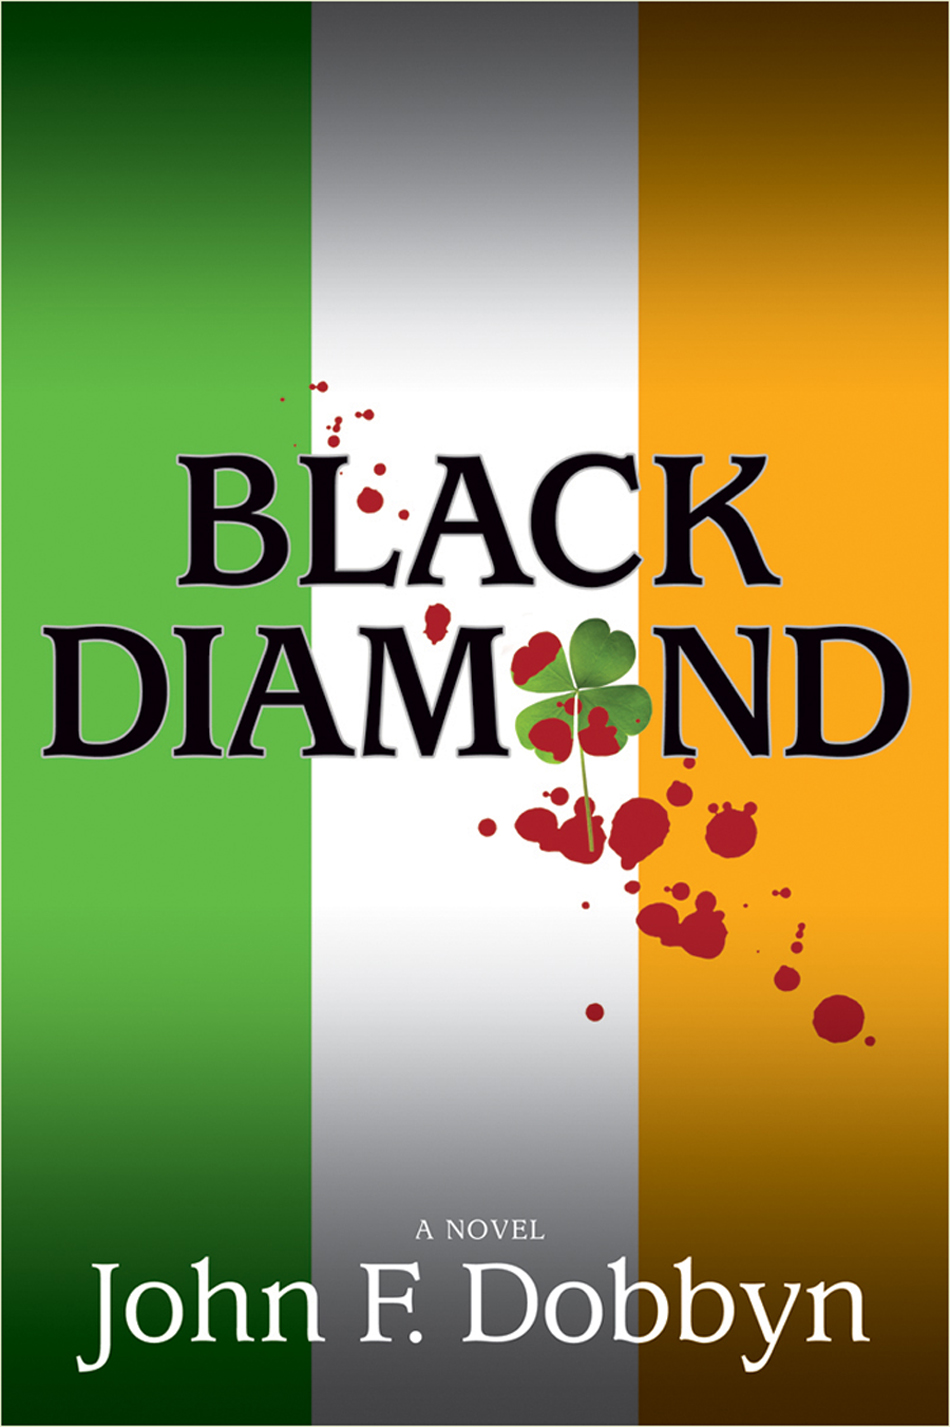 Black Diamond (2011) by John F. Dobbyn